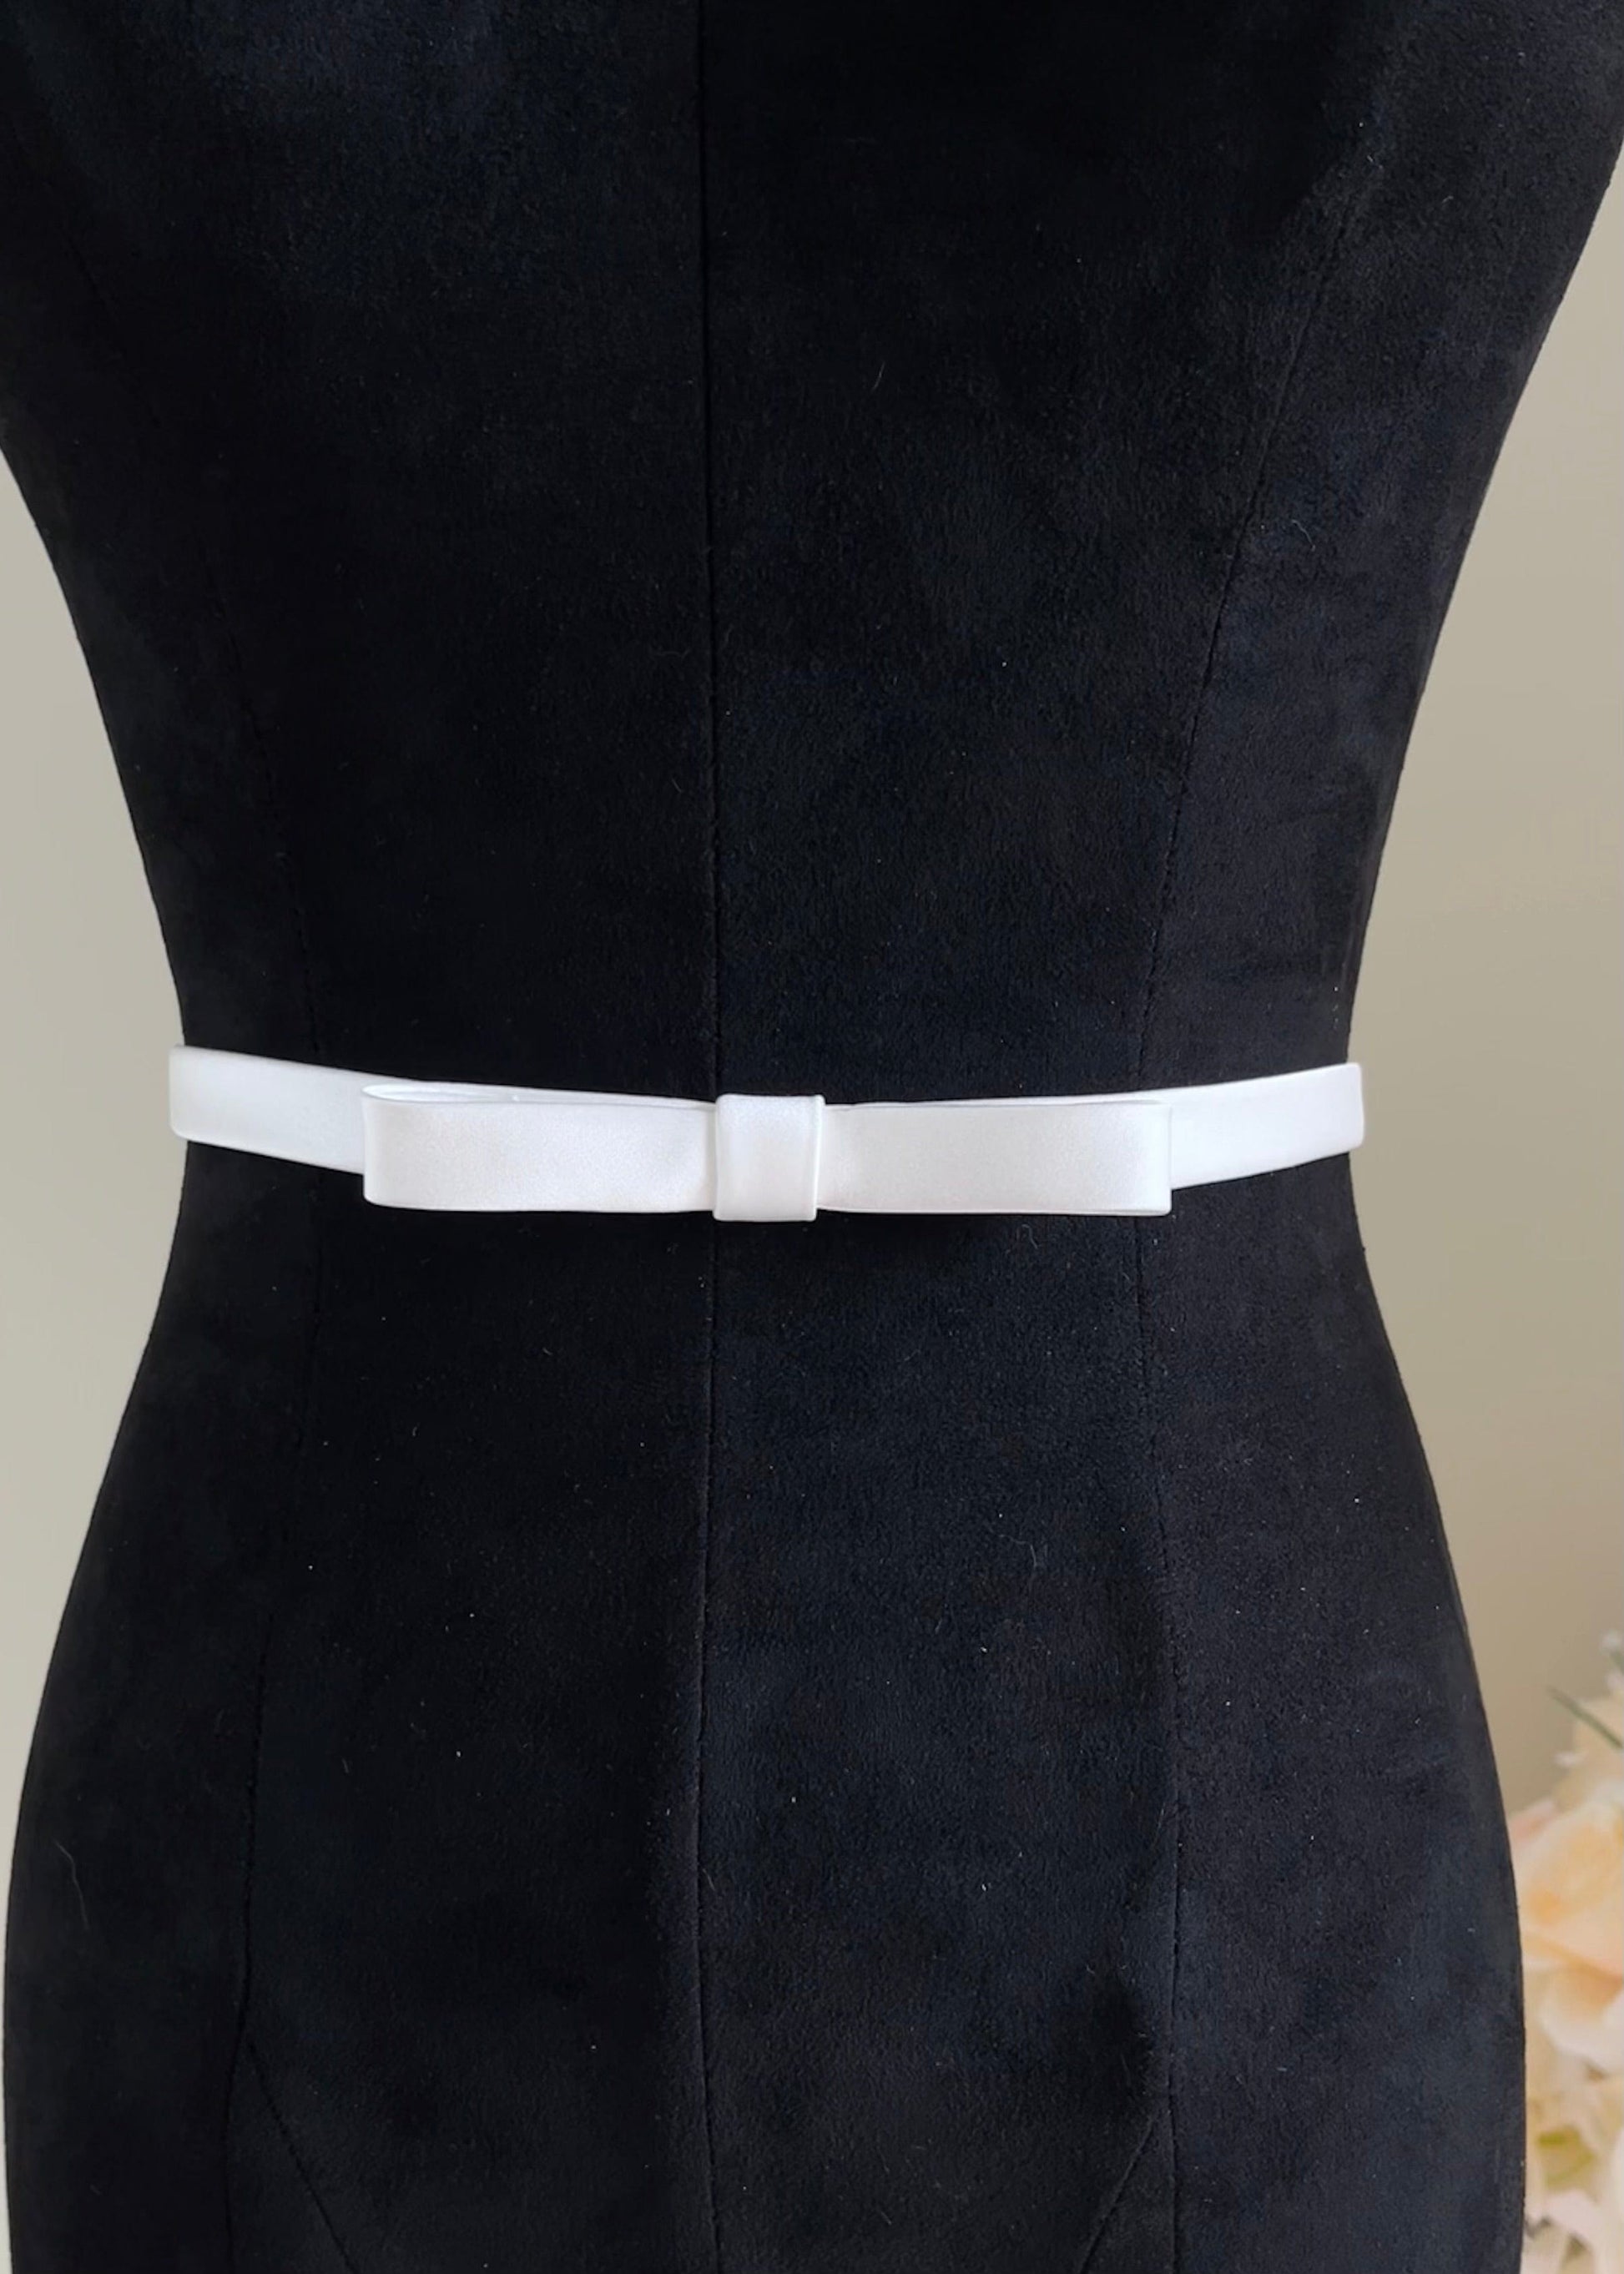 Bieauli belts LExquisite bow belts, wedding belts, ribbons, thin belts, wedding dress accessories